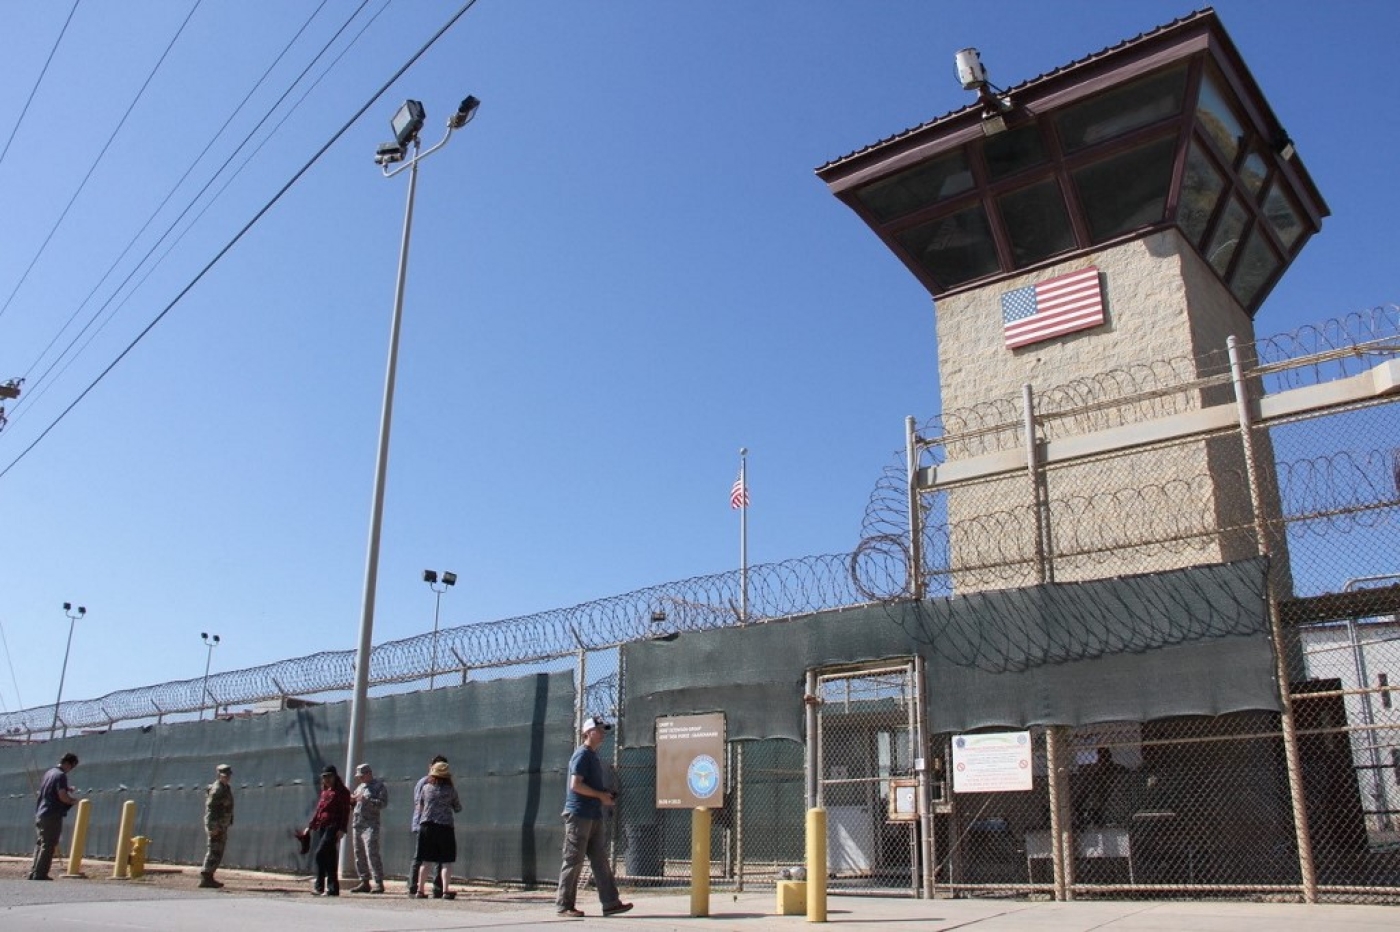 Thirty-nine prisoners remain at the Guantanamo Bay prison.